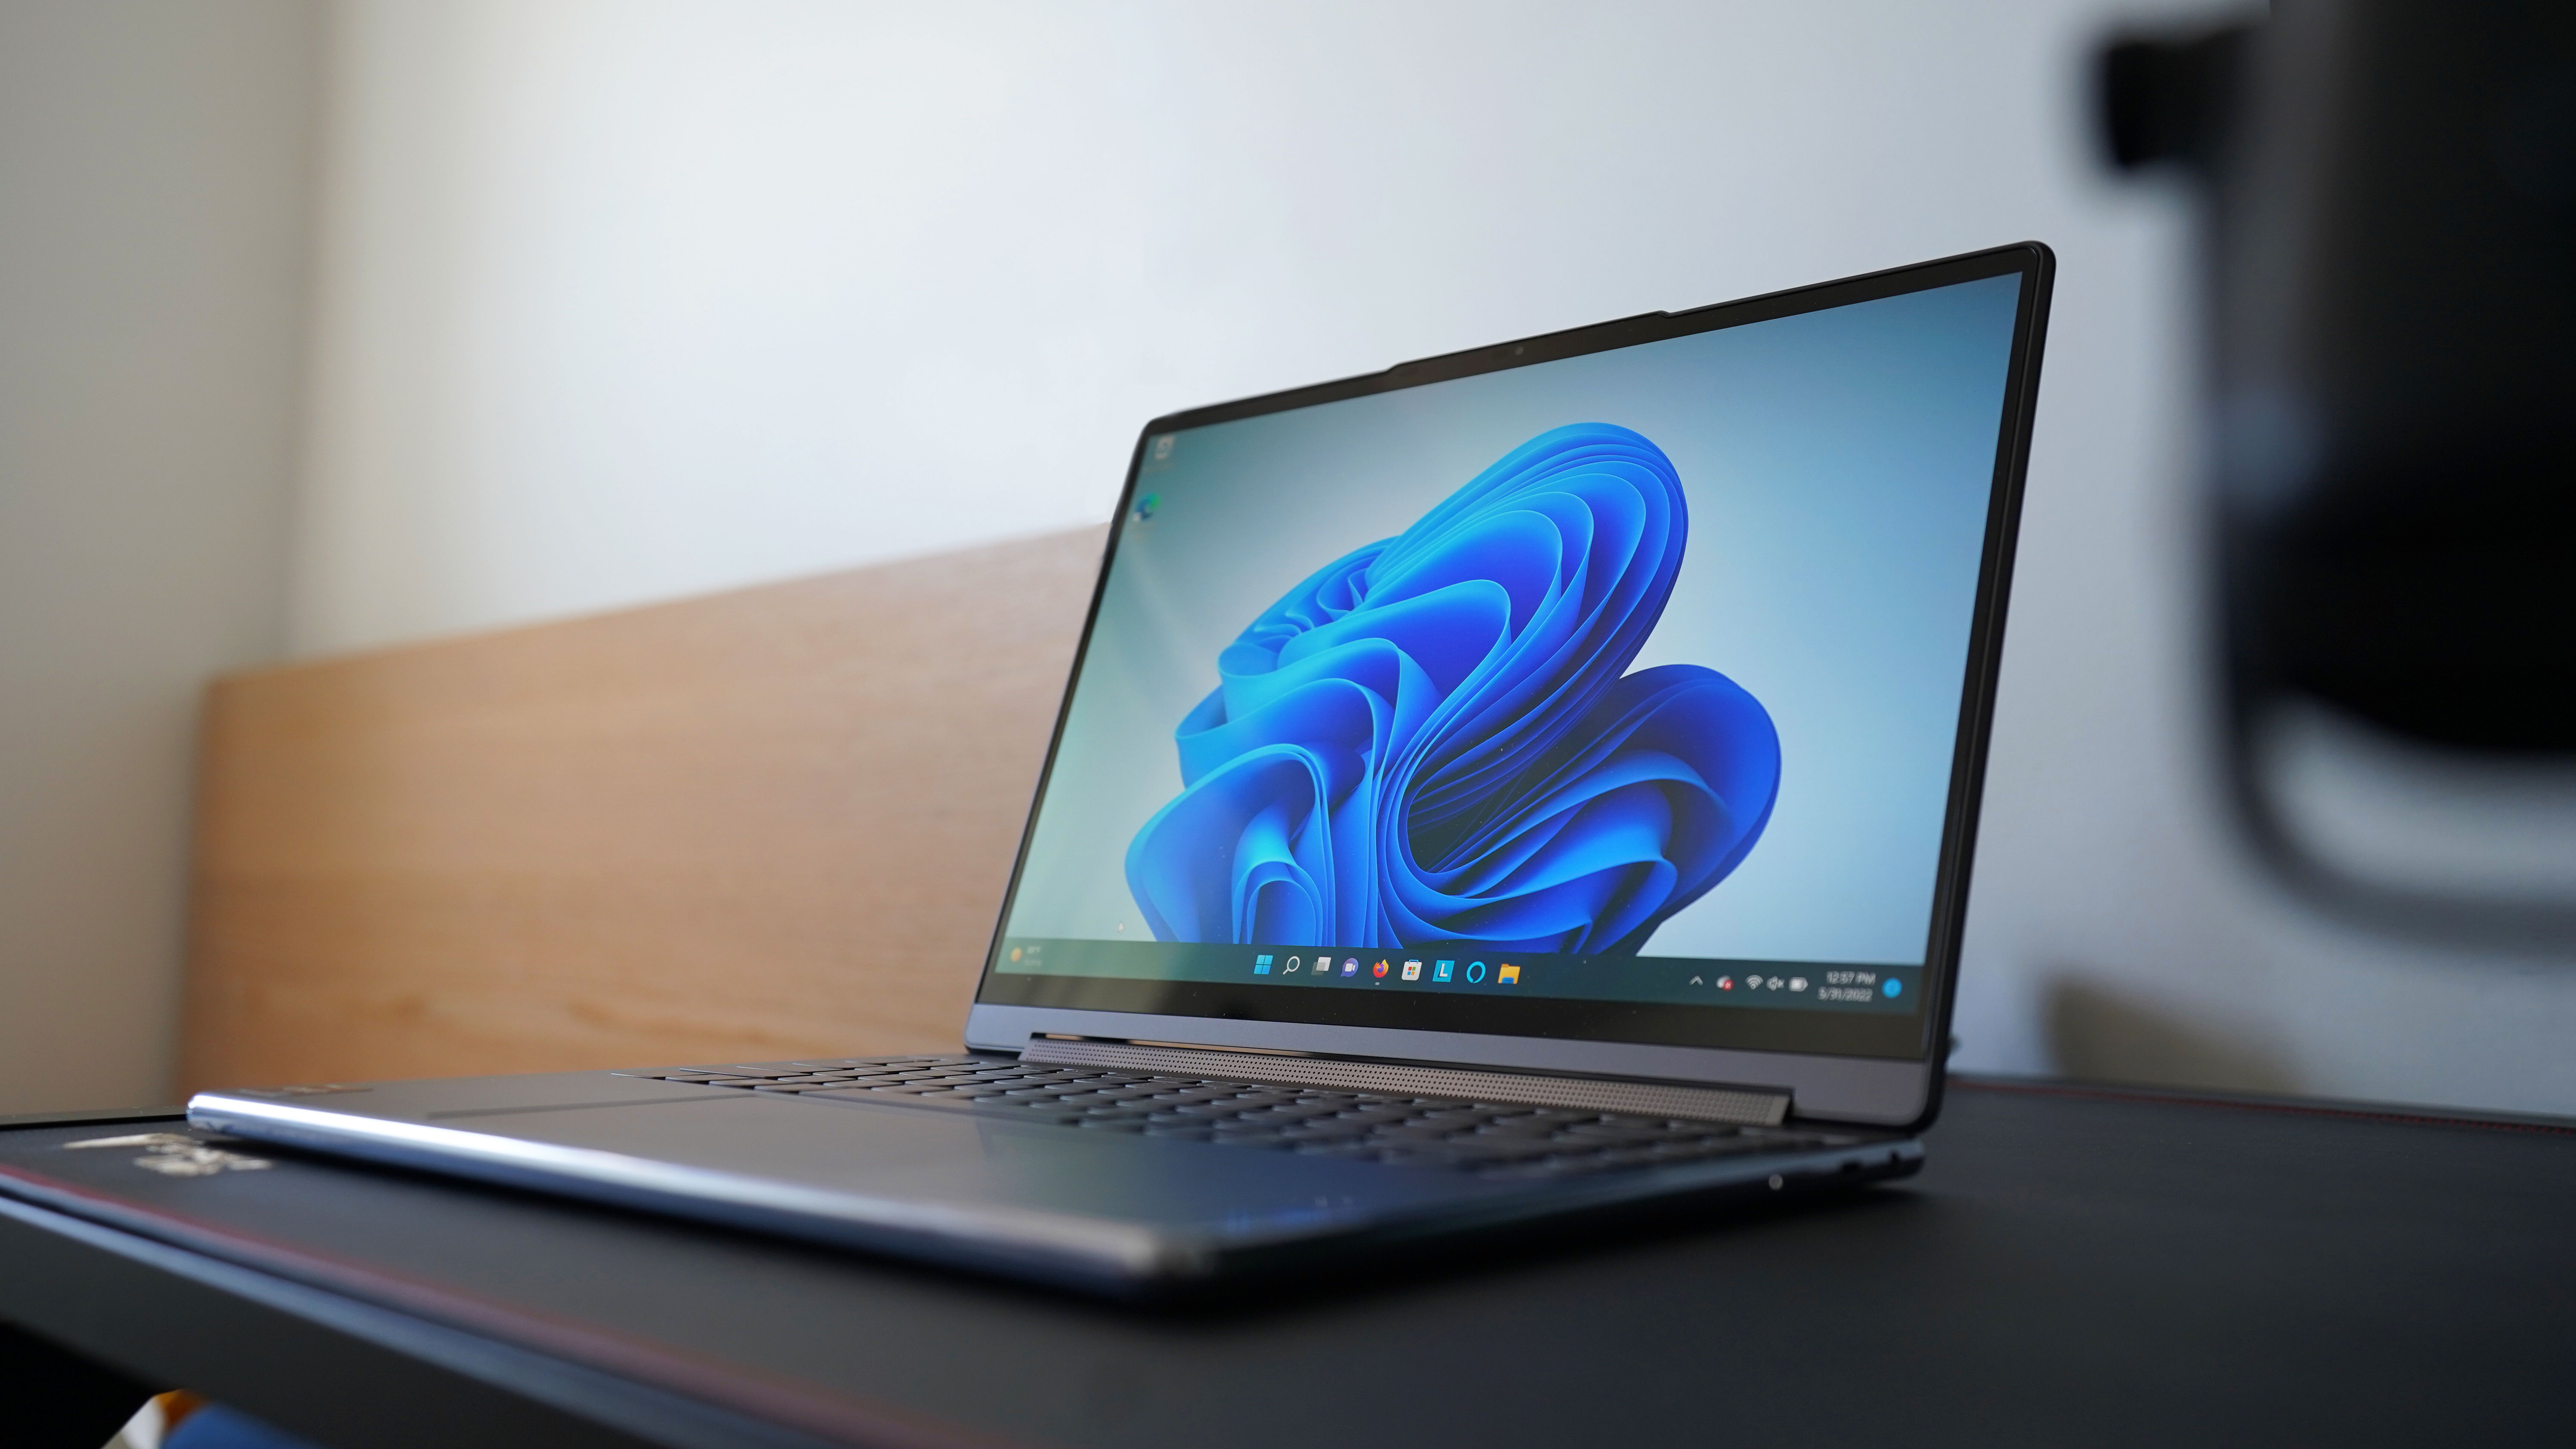 Yoga 9i (14” Intel) 2 in 1 Laptop